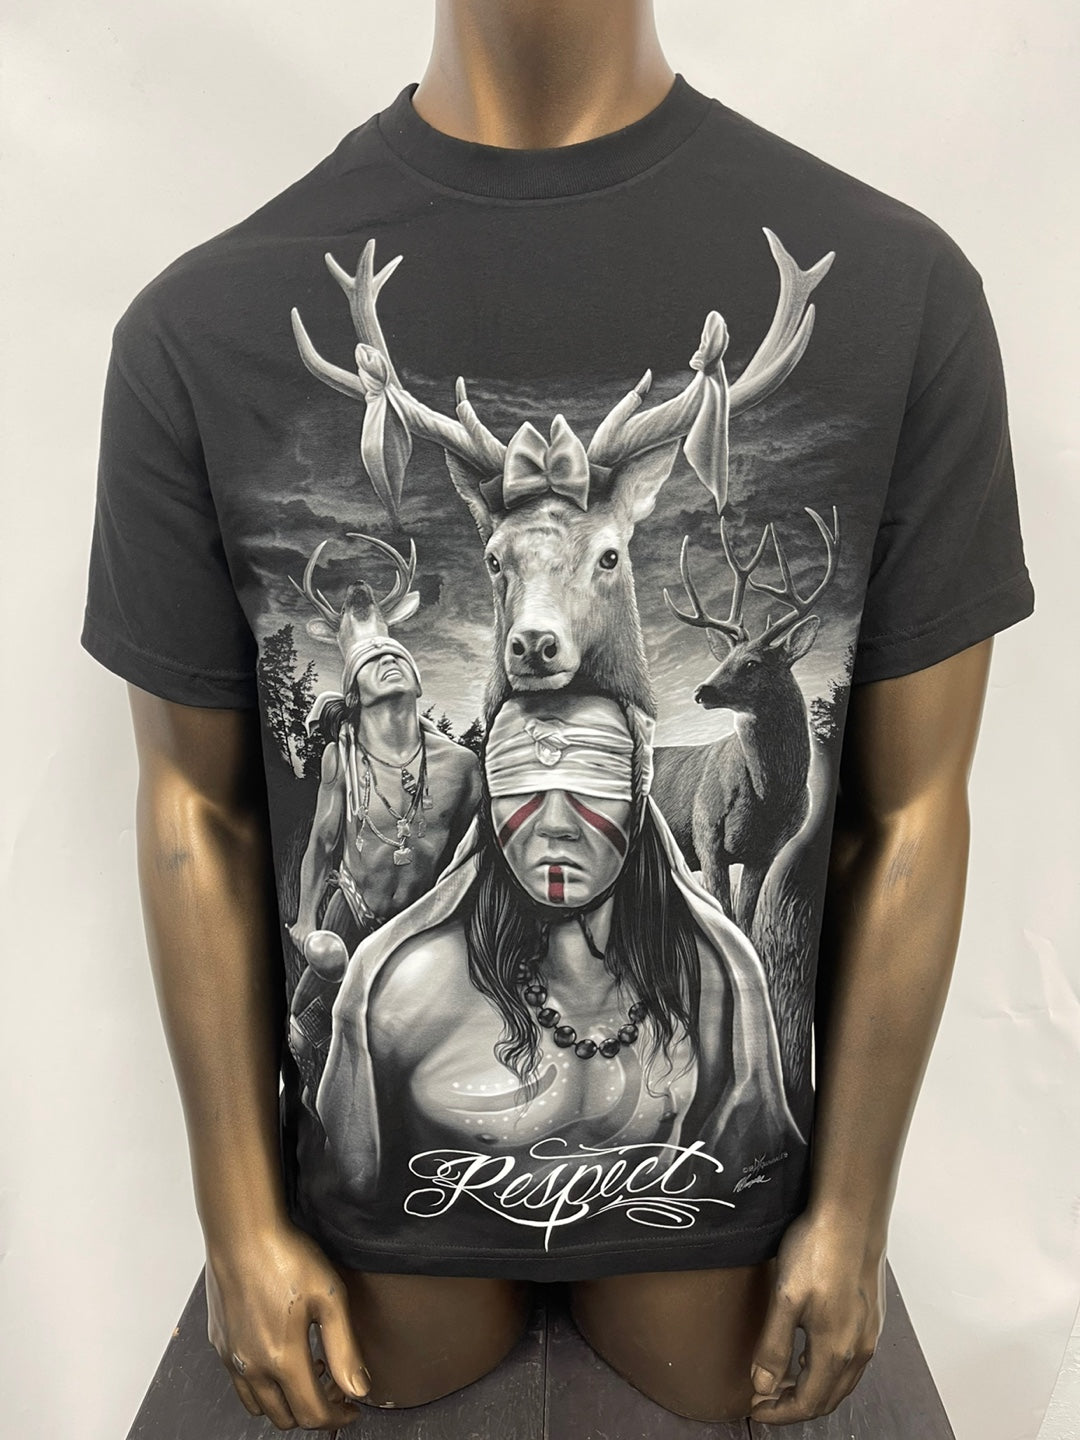 DGA Respect Native American Indian T-Shirt